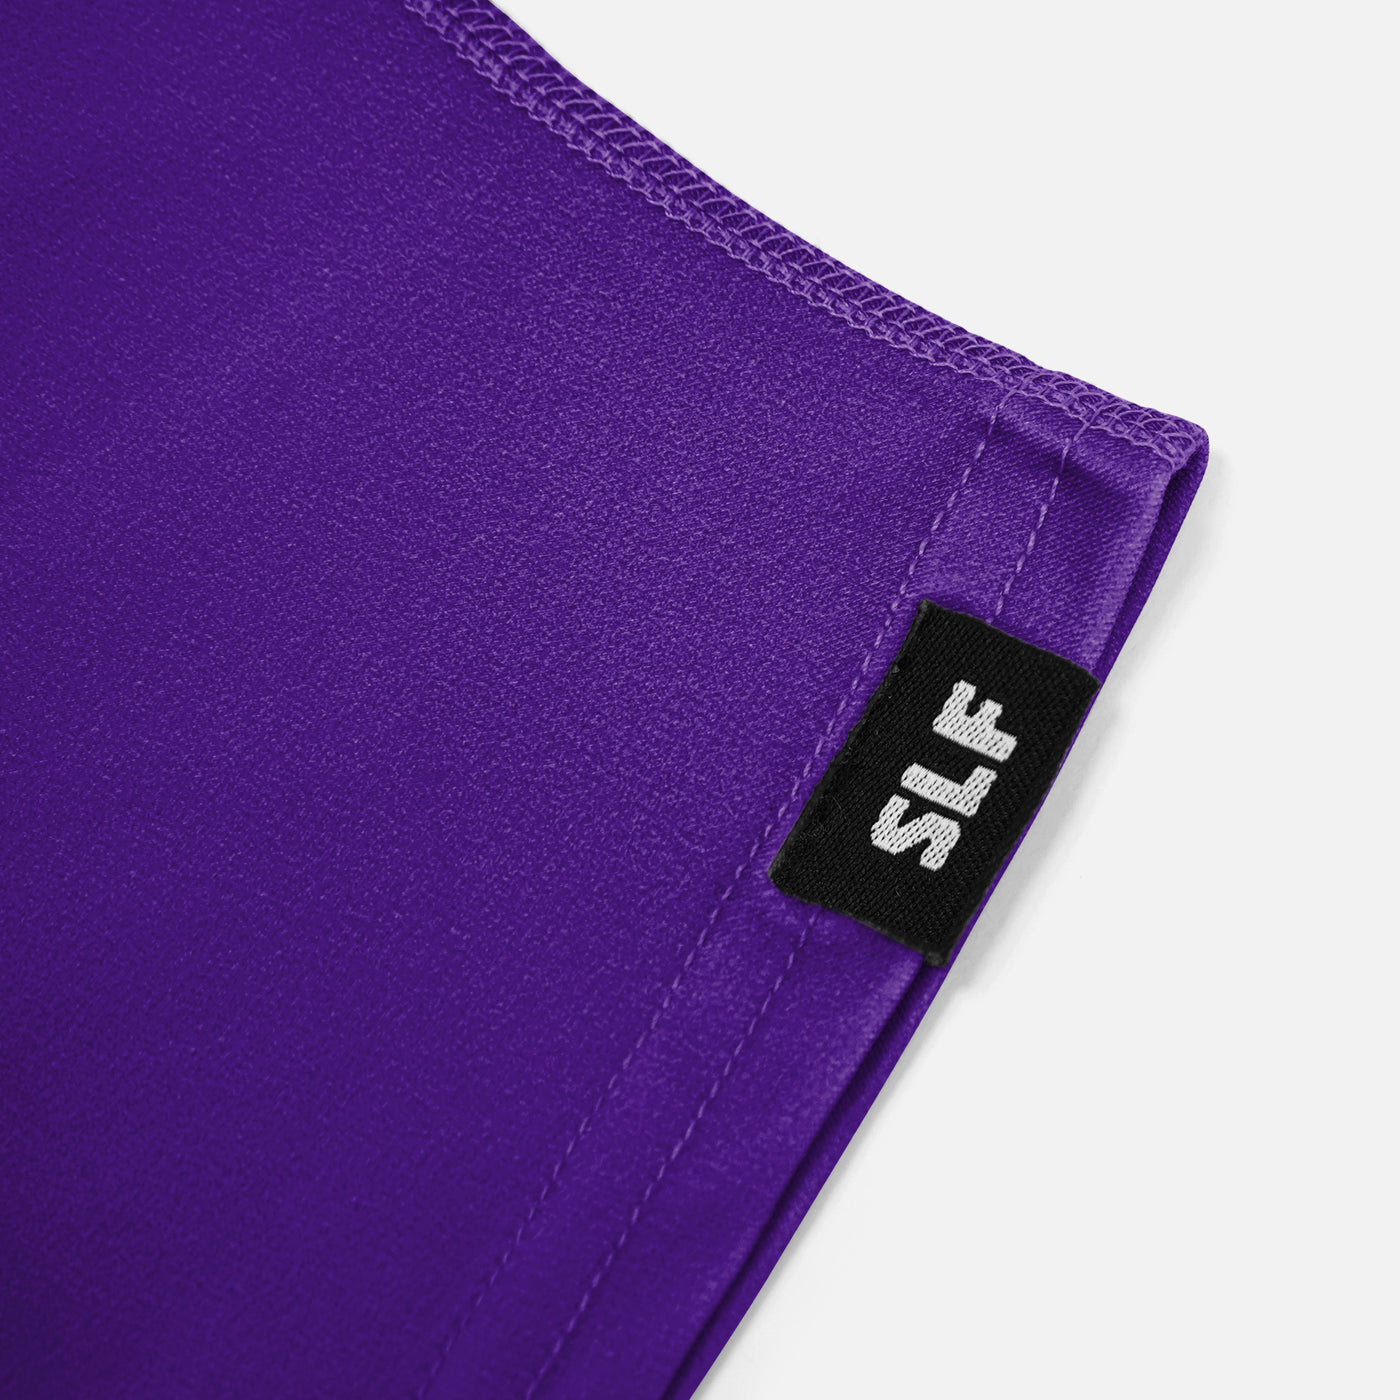 Hue Purple Spats / Cleat Covers - Big